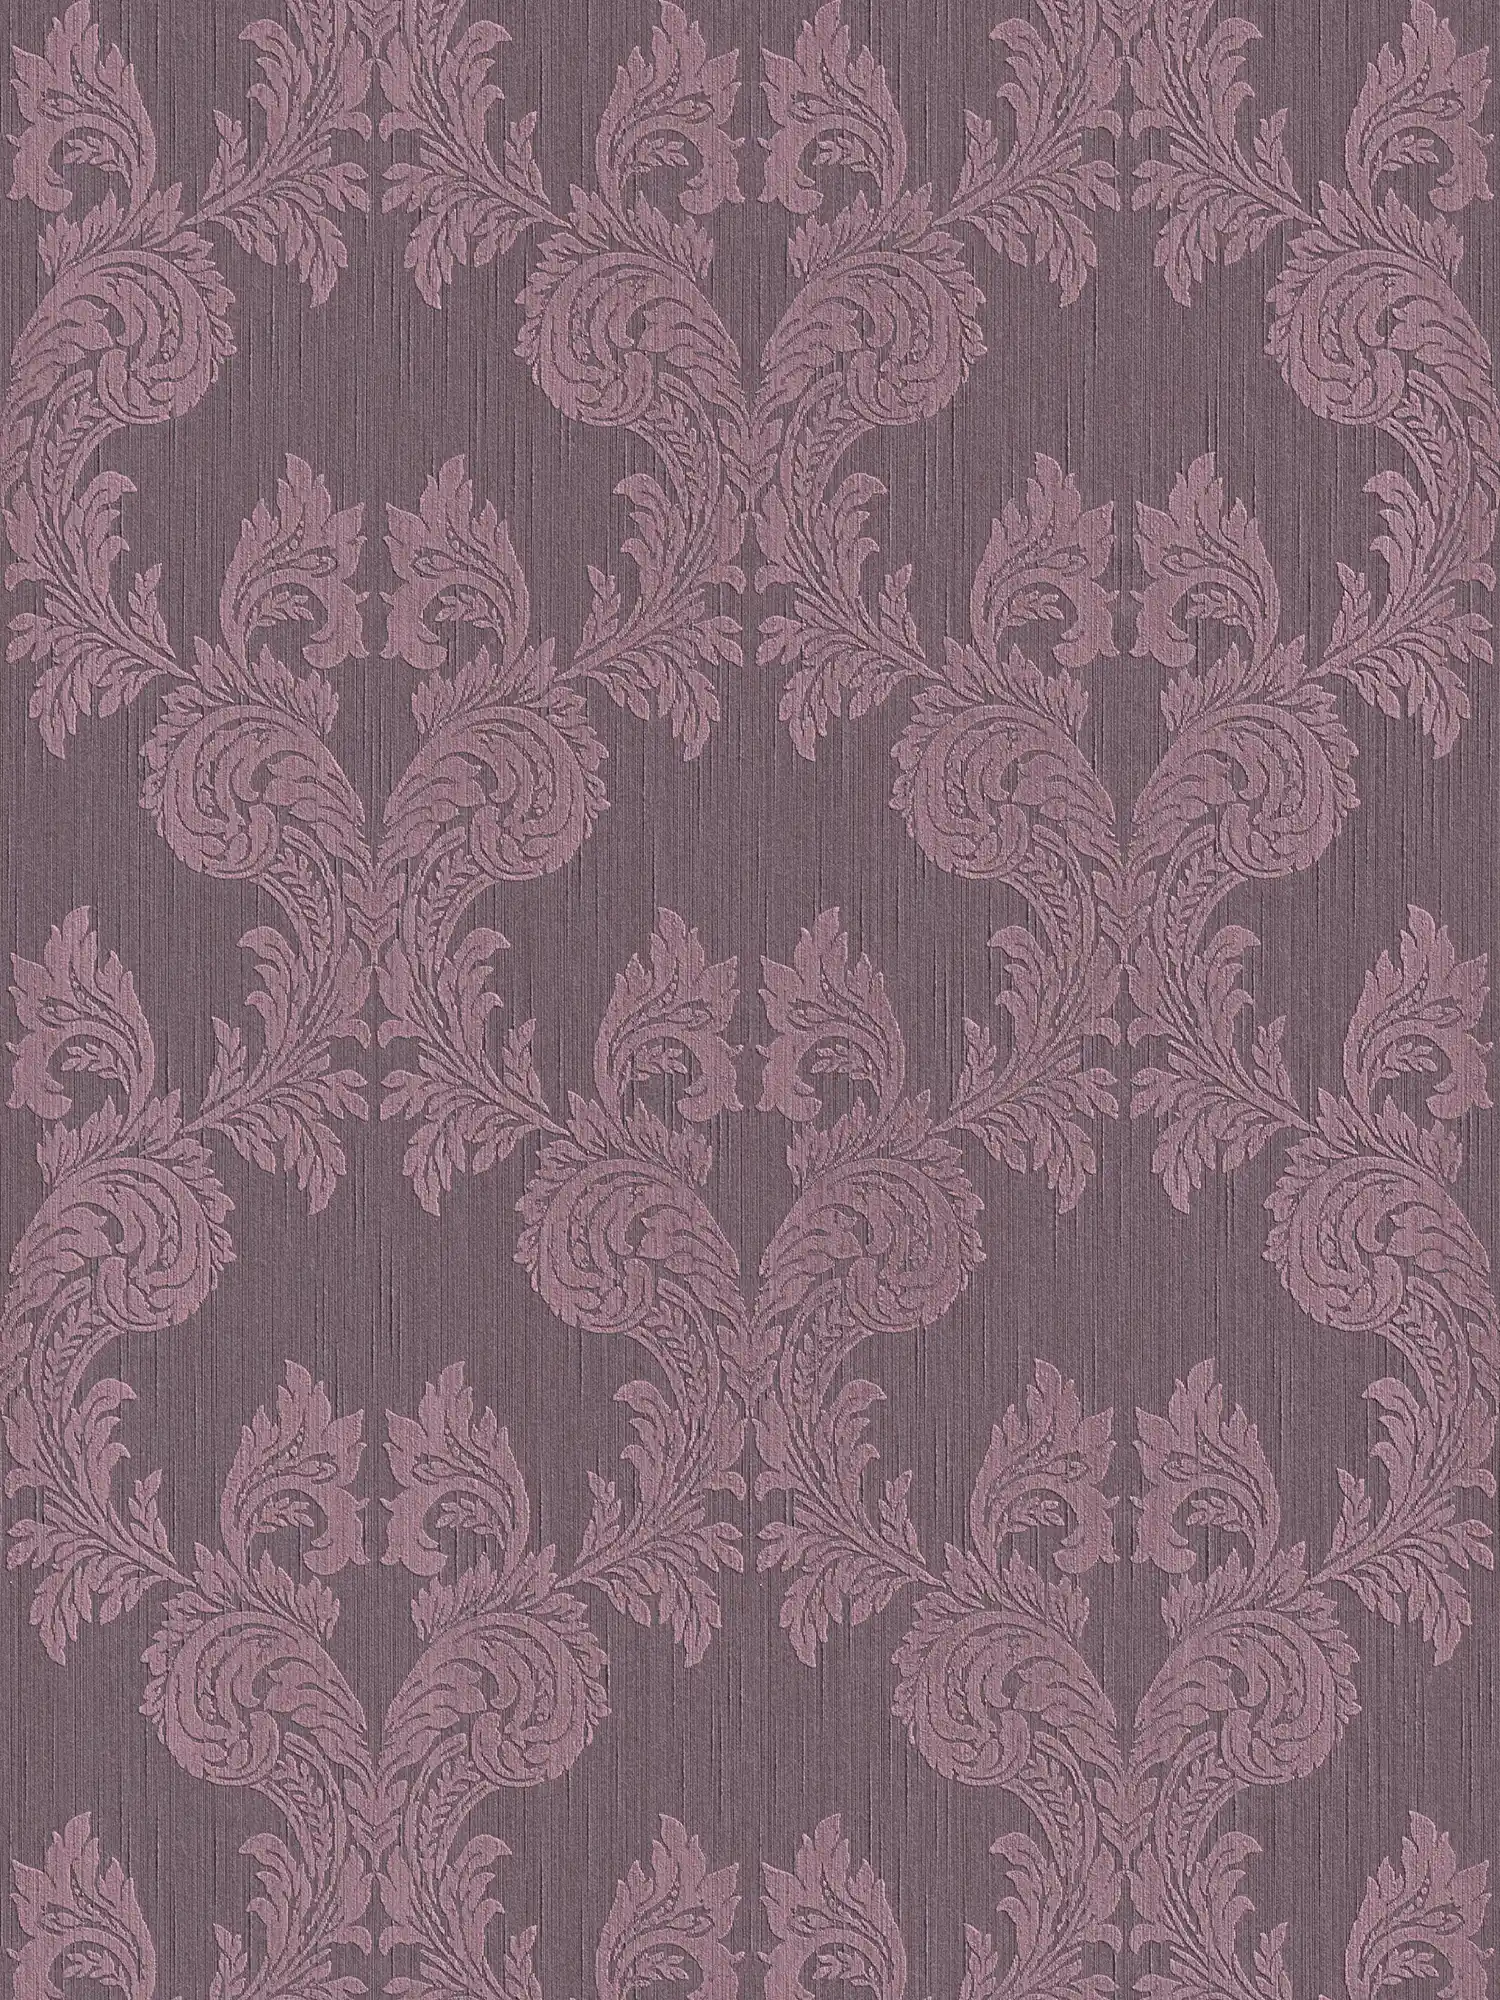         Tapete mit floralem Ornament Muster & Struktureffekt – Lila
    